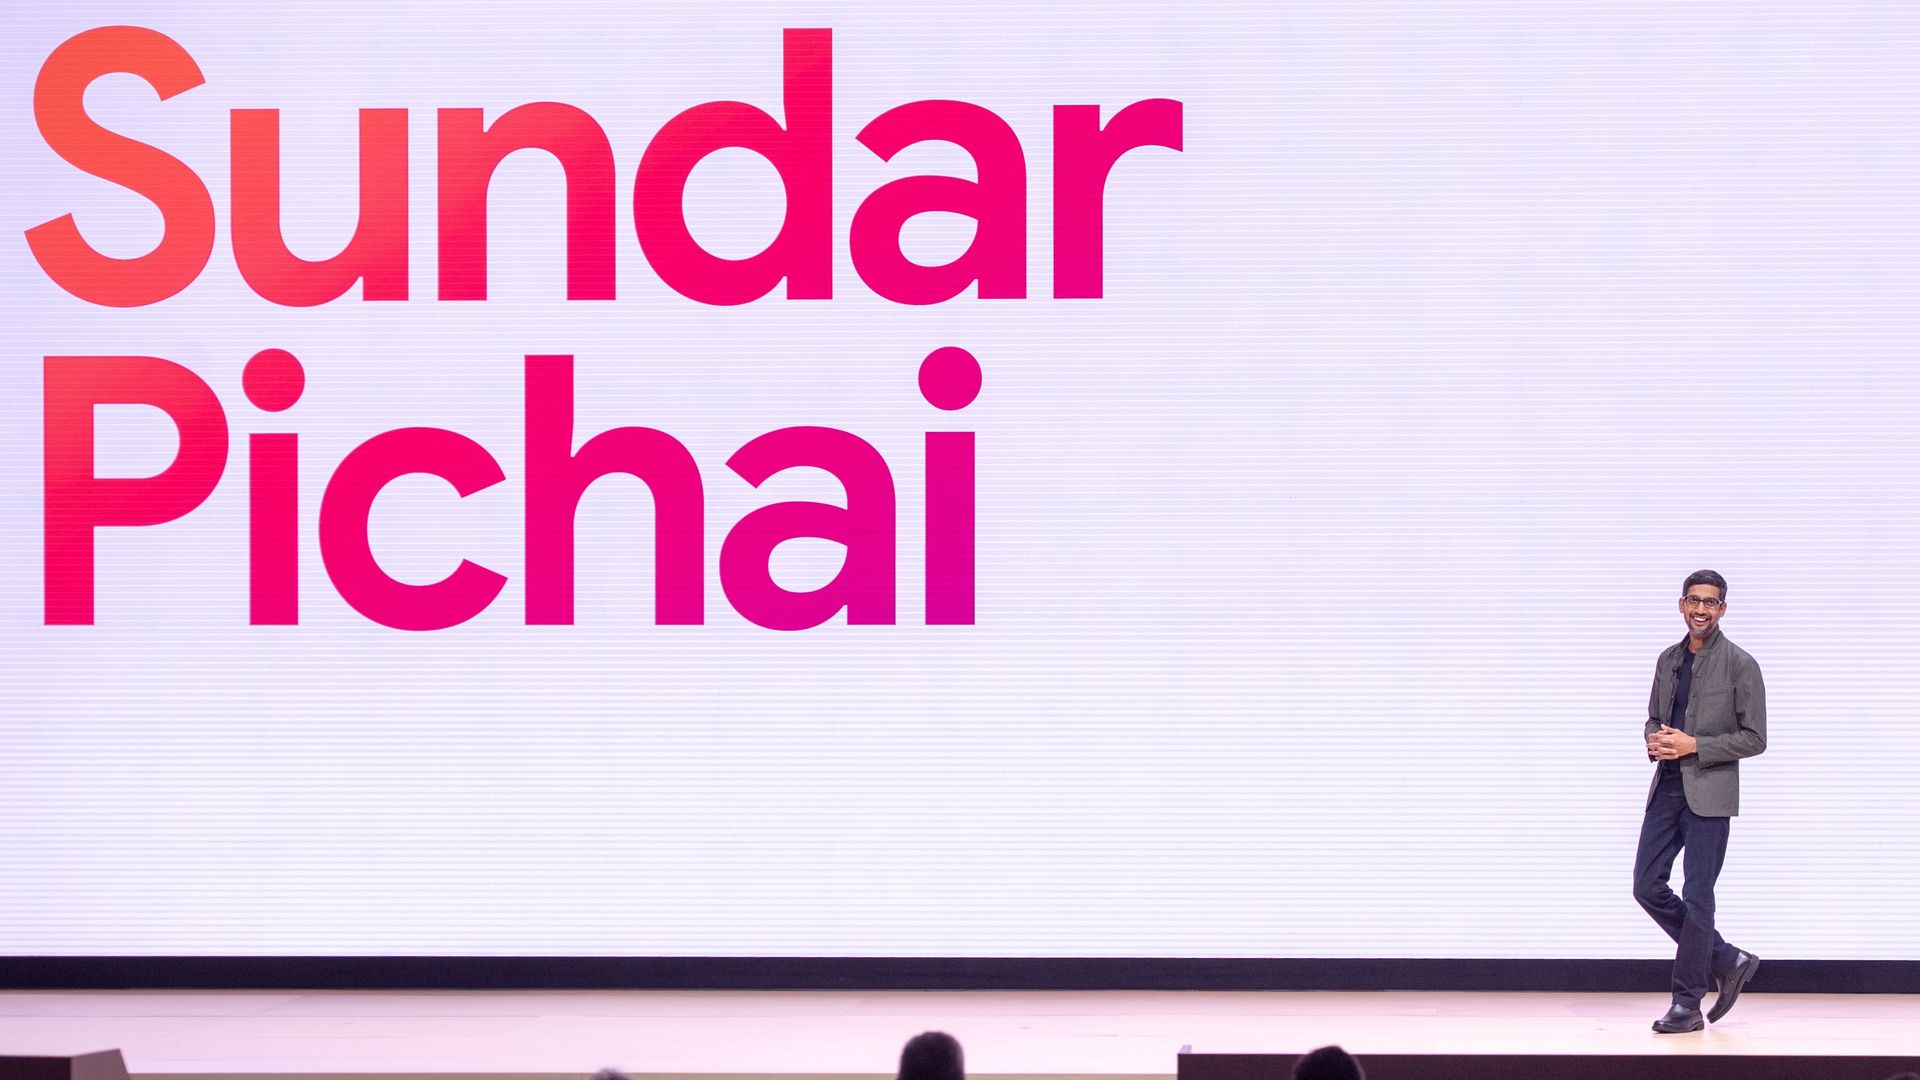 Sundar Pichai walks on a stage where a screen displays his name.